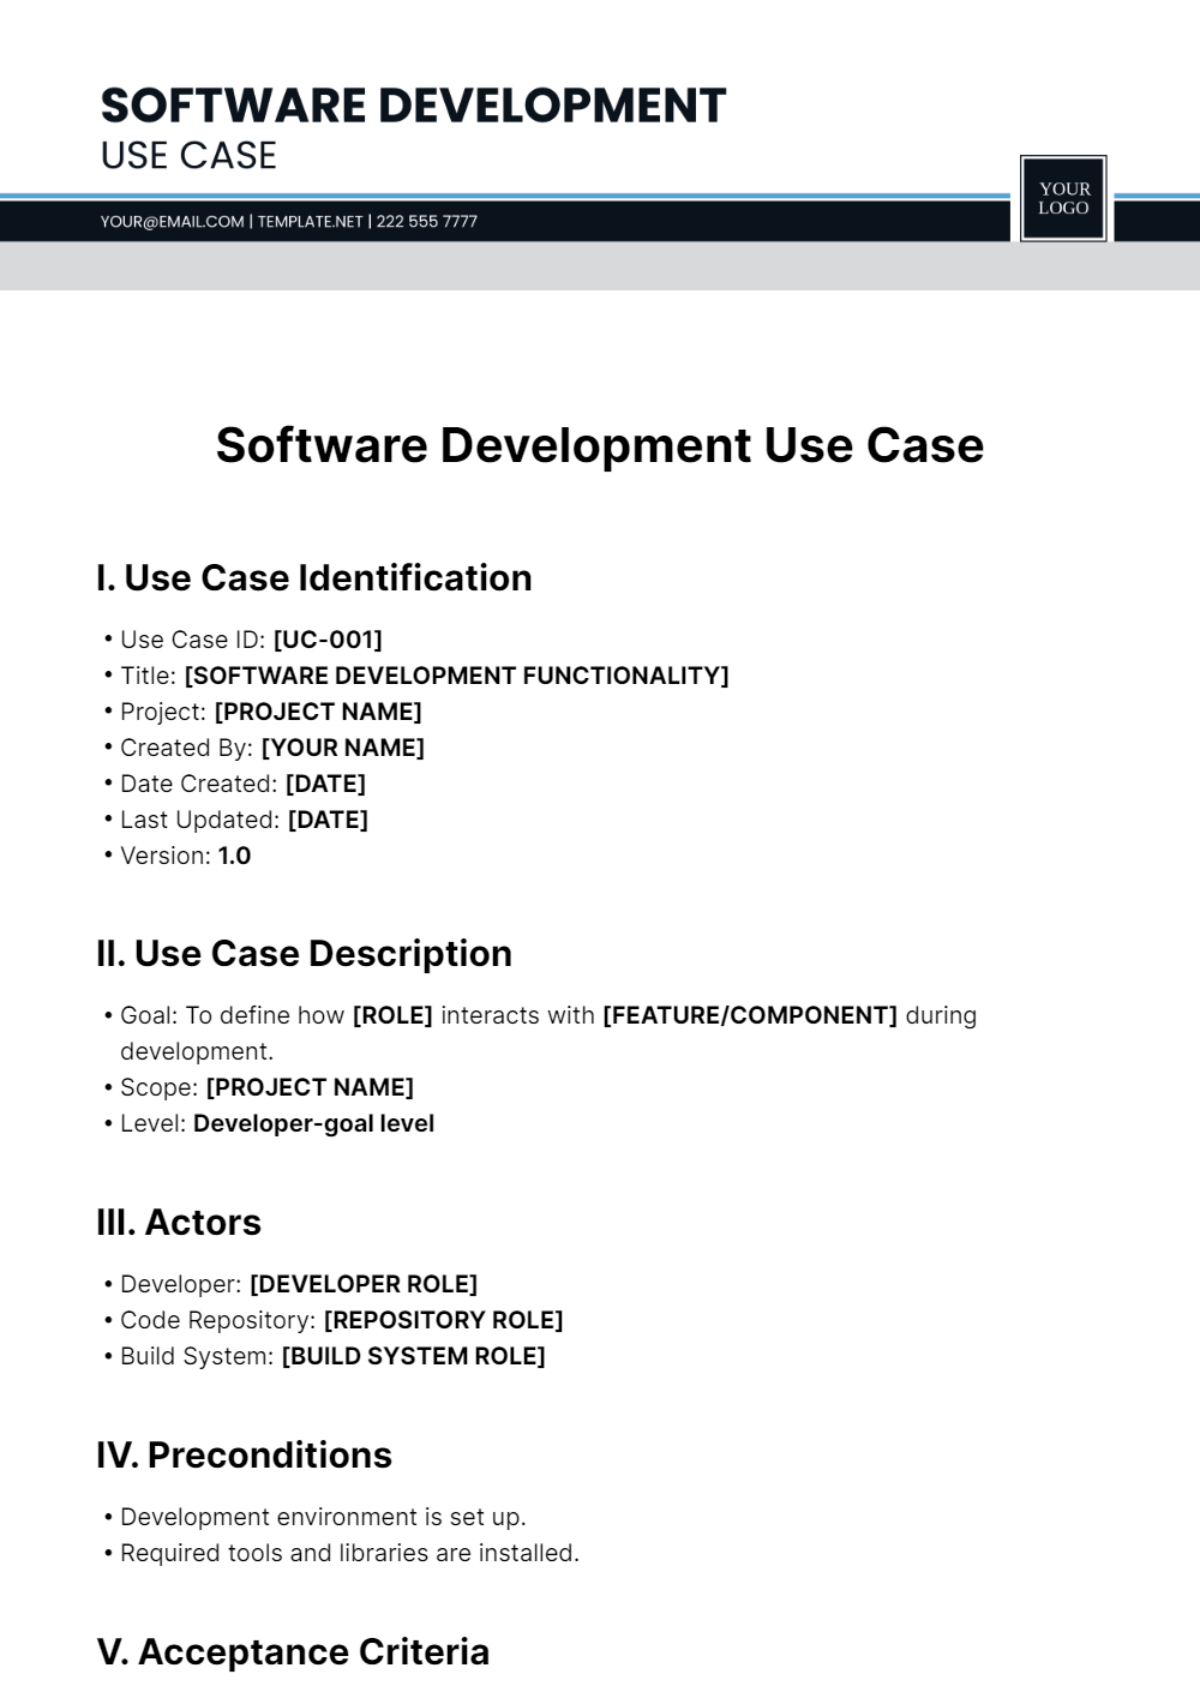 Software Development Use Case Template